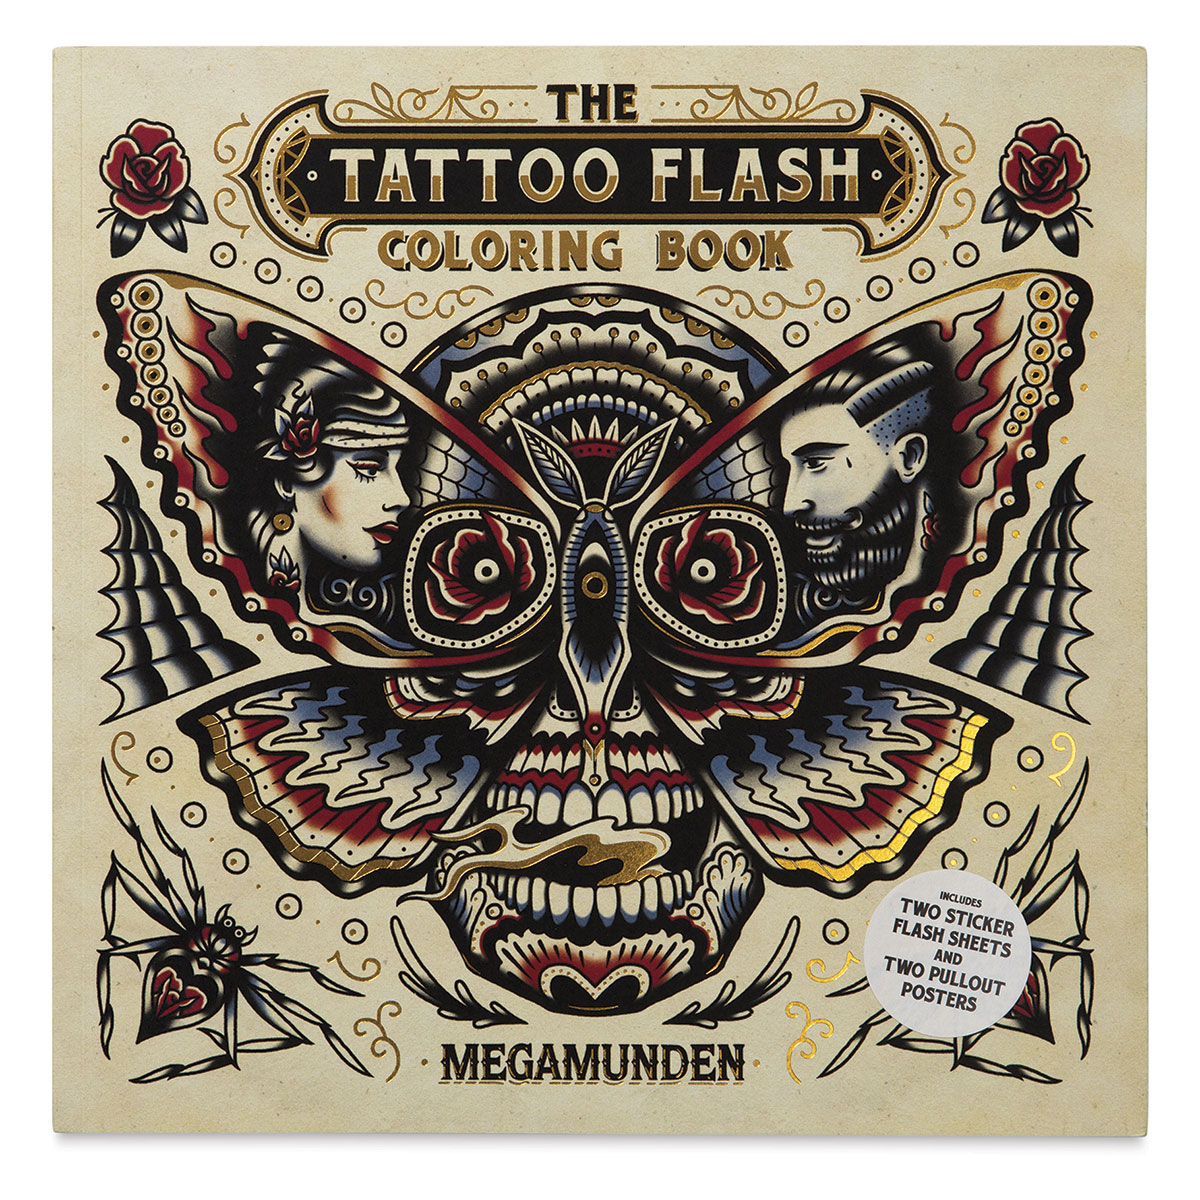 The tattoo flash coloring book blick art materials